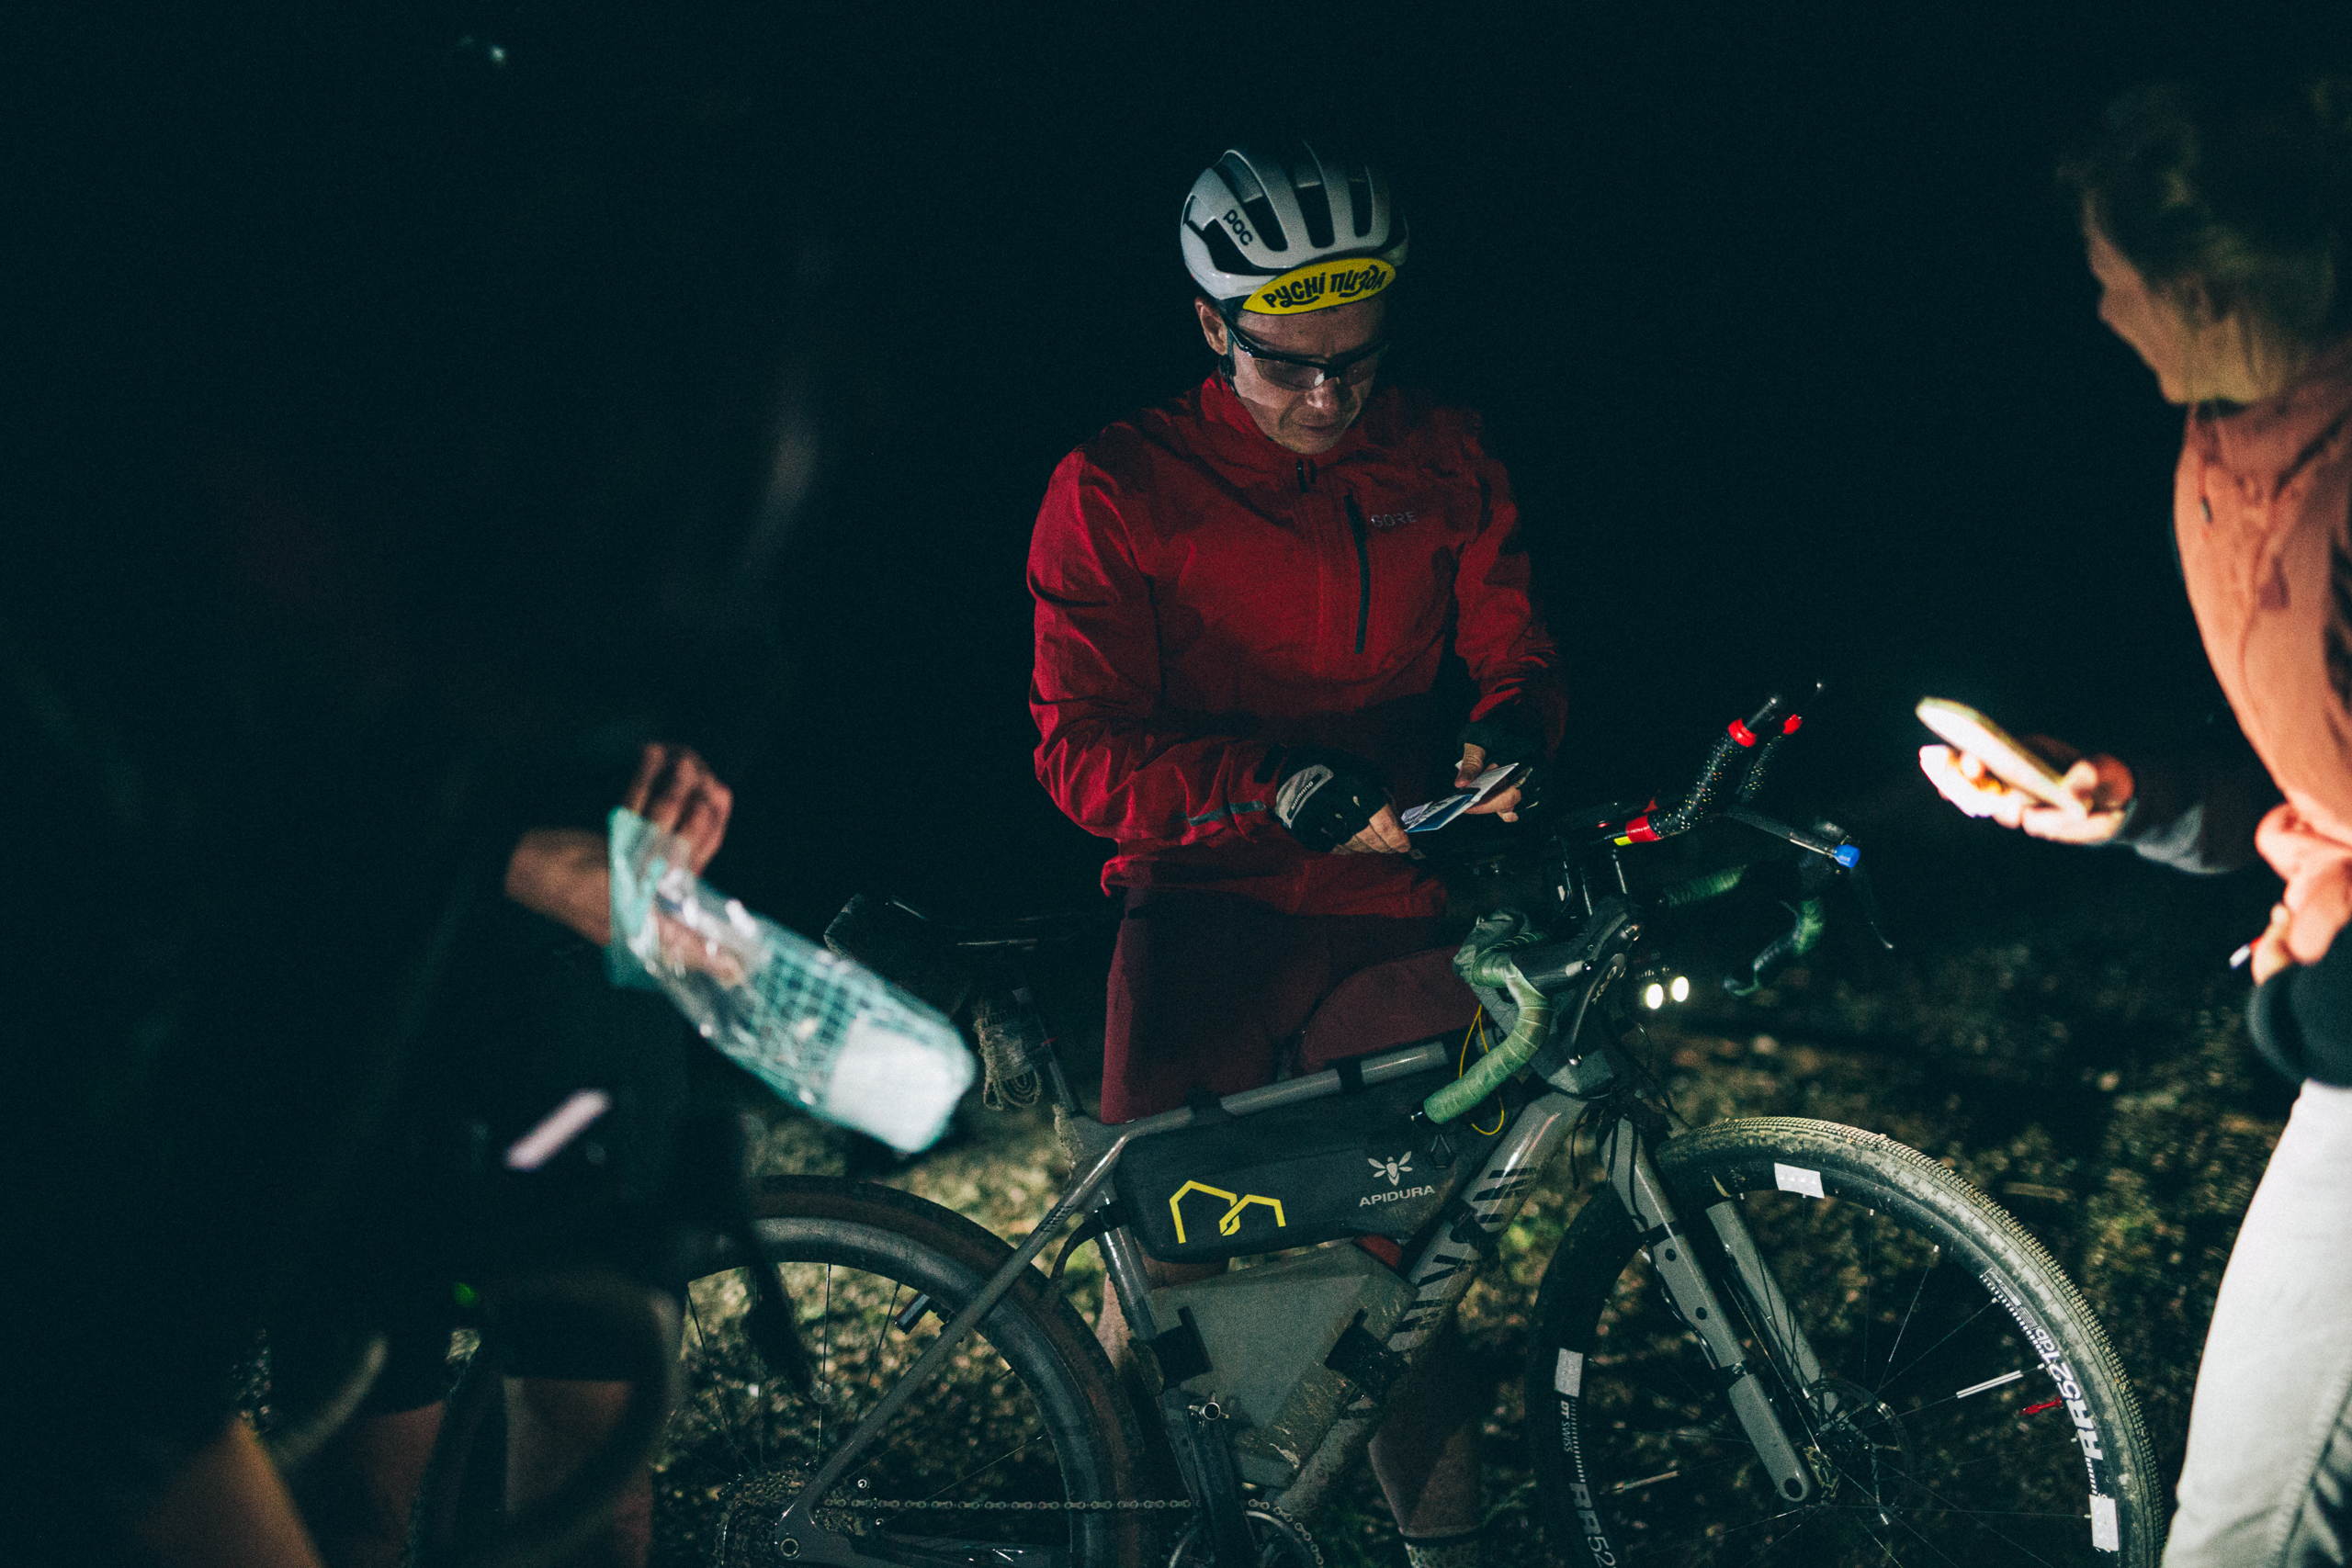 gravel cyclist at night